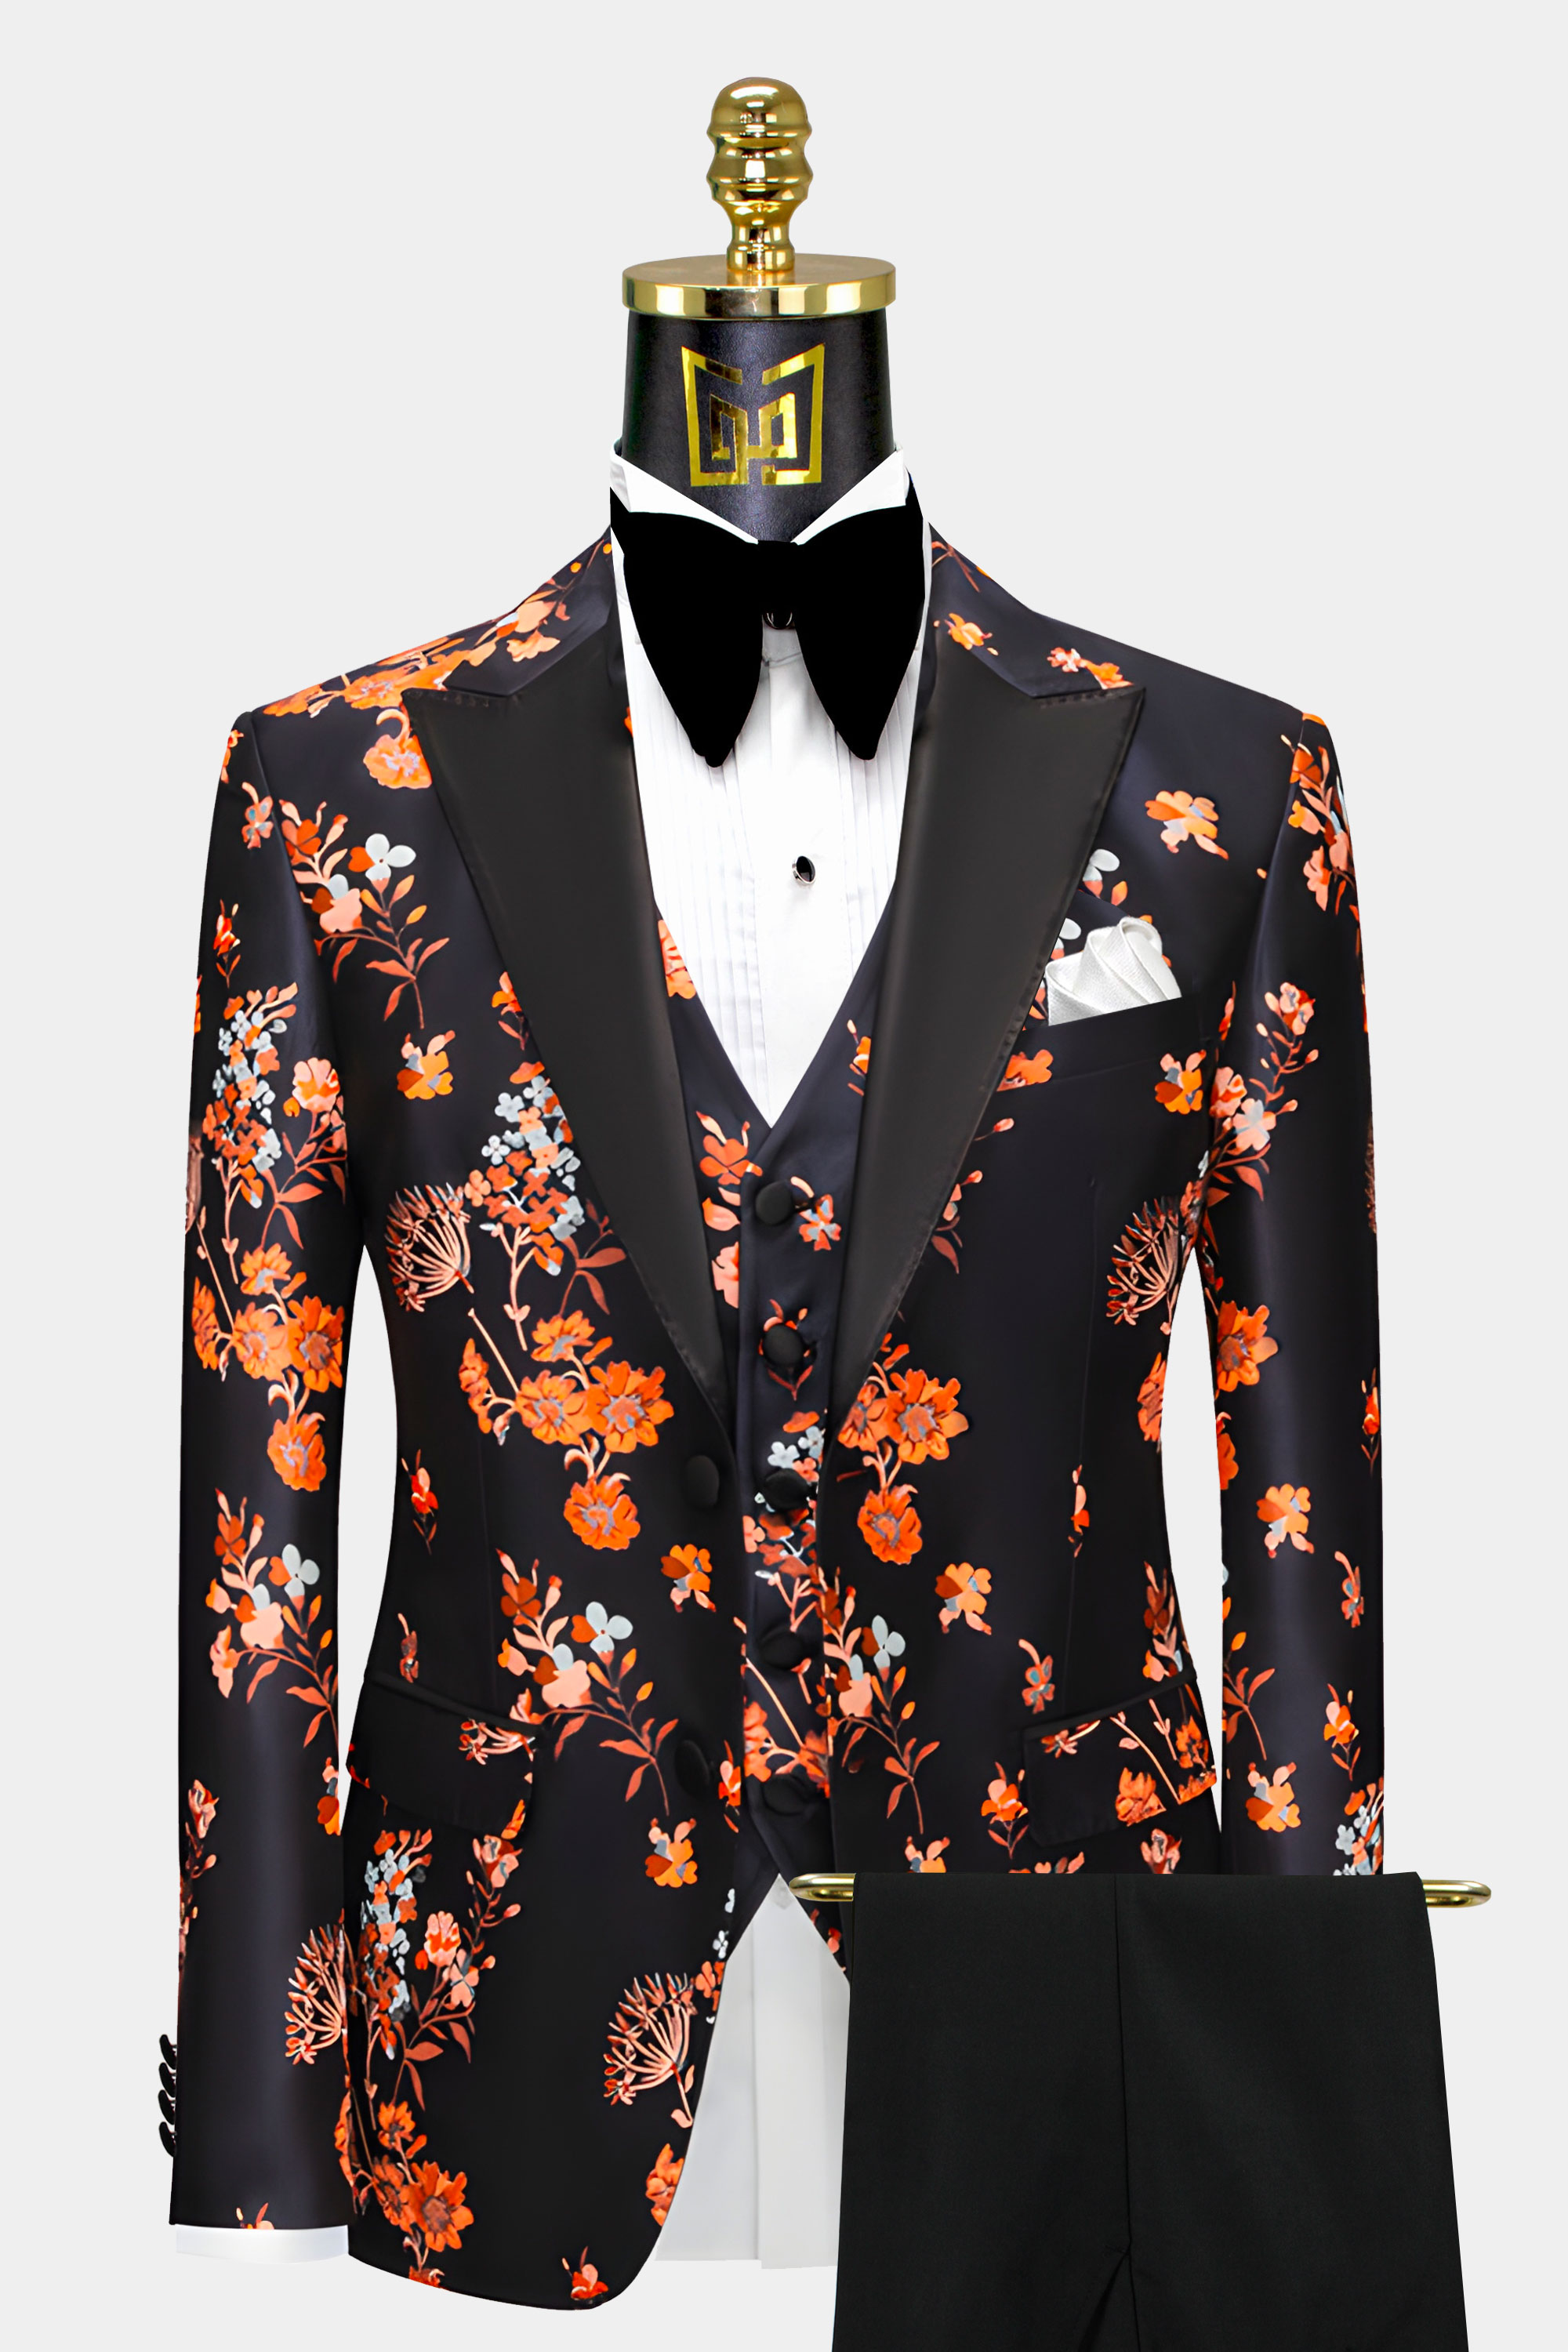 Mens-Orange-Floral-Tuxedo-Wedding-Groom-Prom-Suit-from-Gentlemansguru.com.jpg